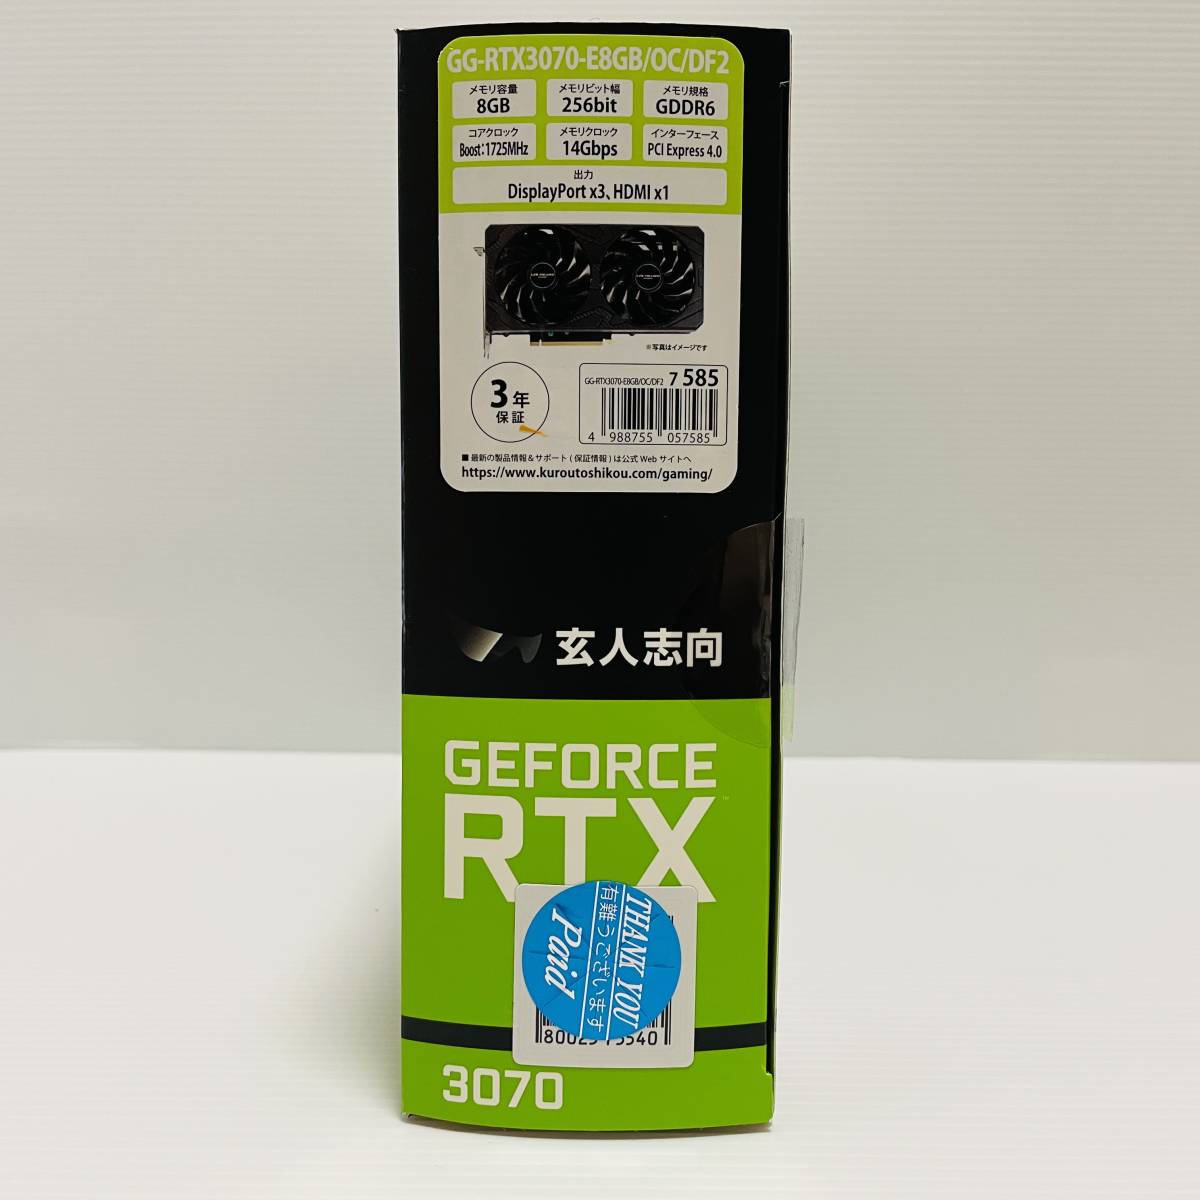 1円 玄人志向 GALAKURO GAMING GG-RTX3070-E8GB/OC/DF2 ④(PCI Express 